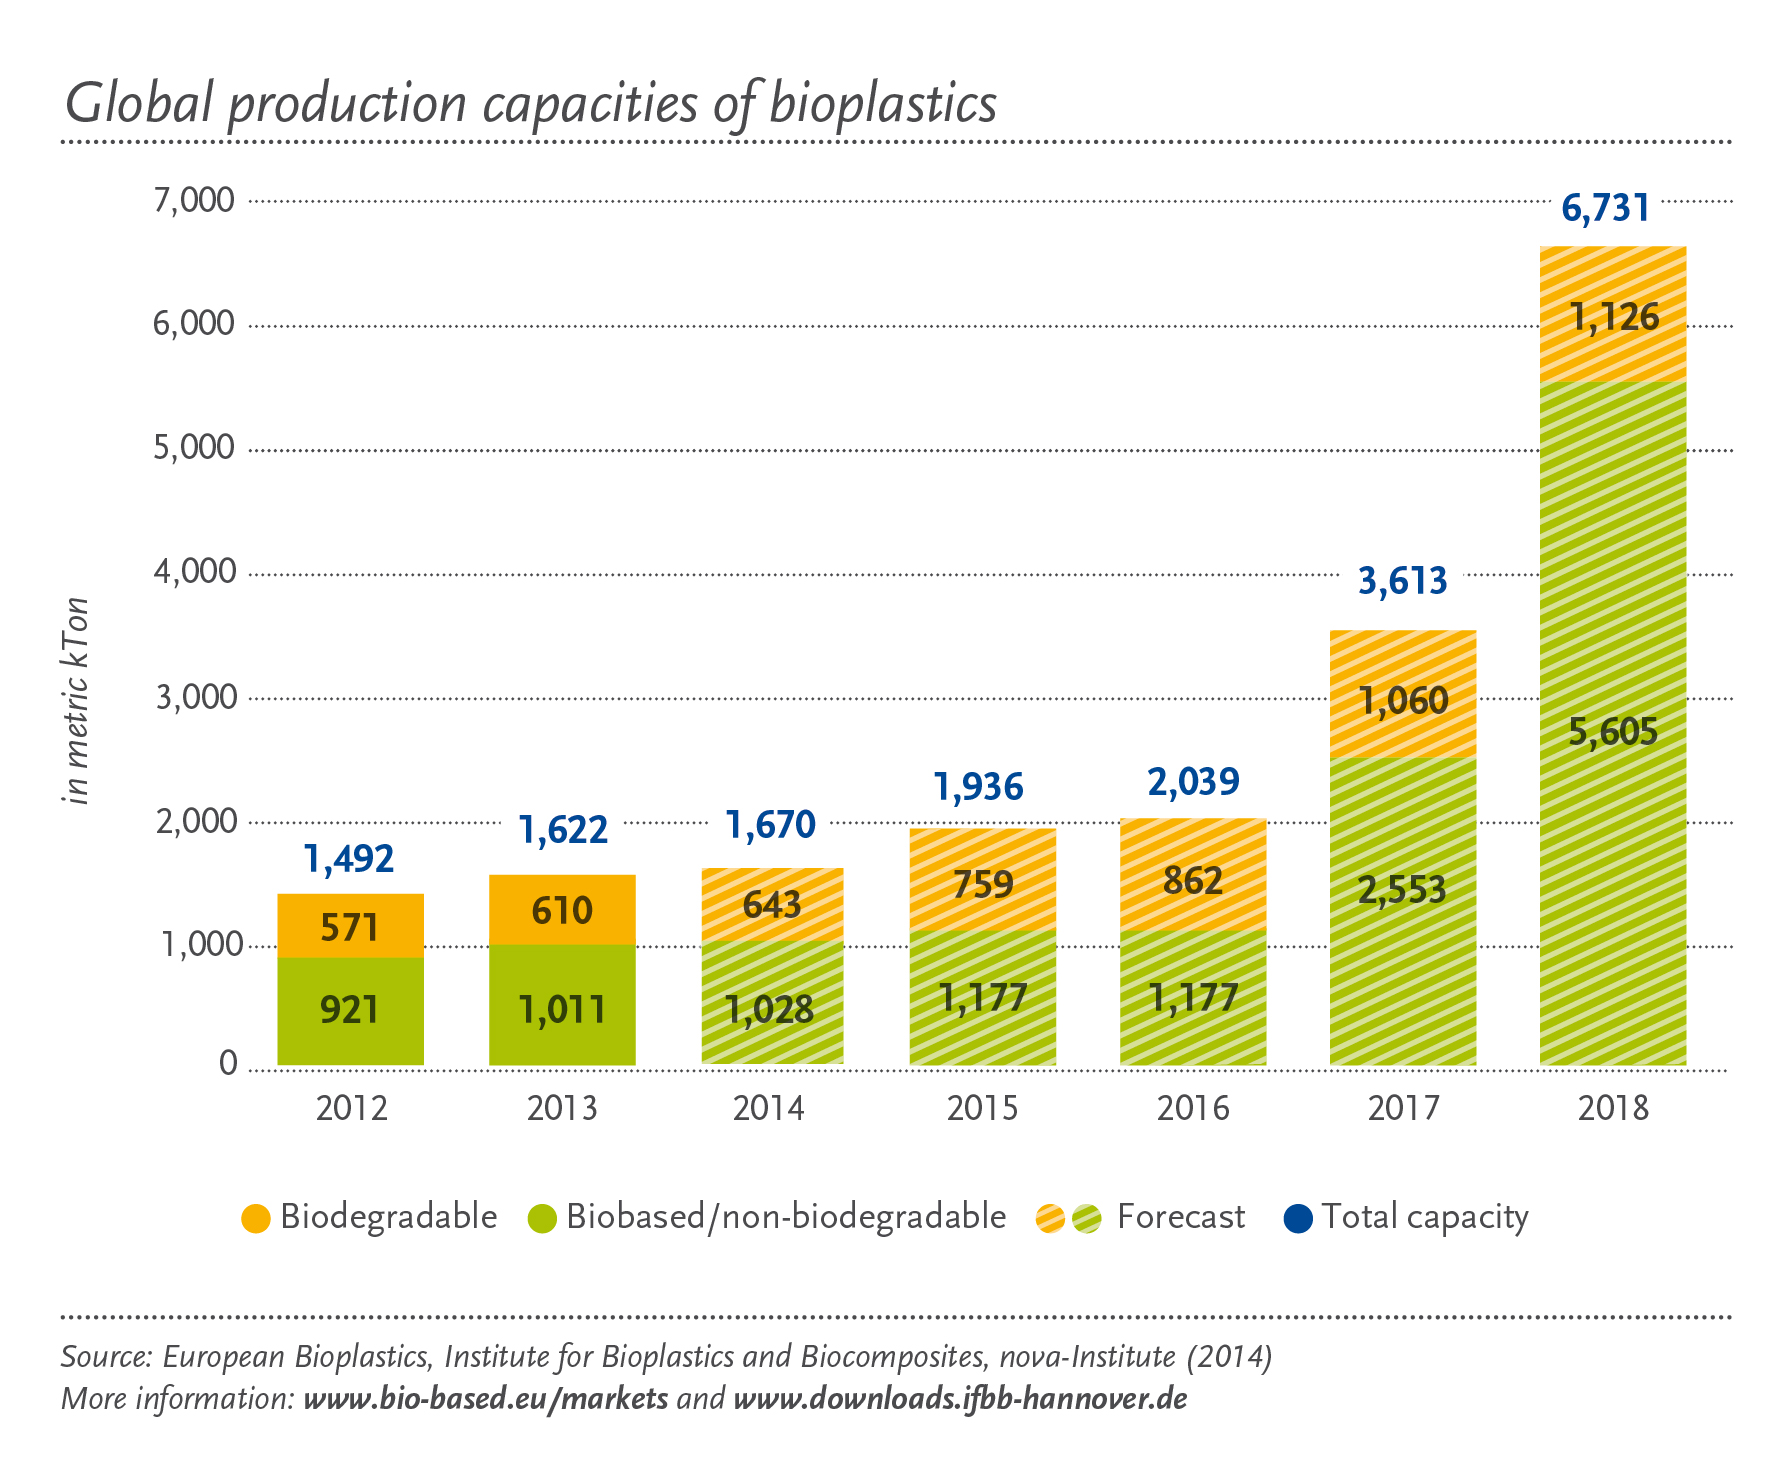 Graph forecasting global production capacities of bioplastics through 2018